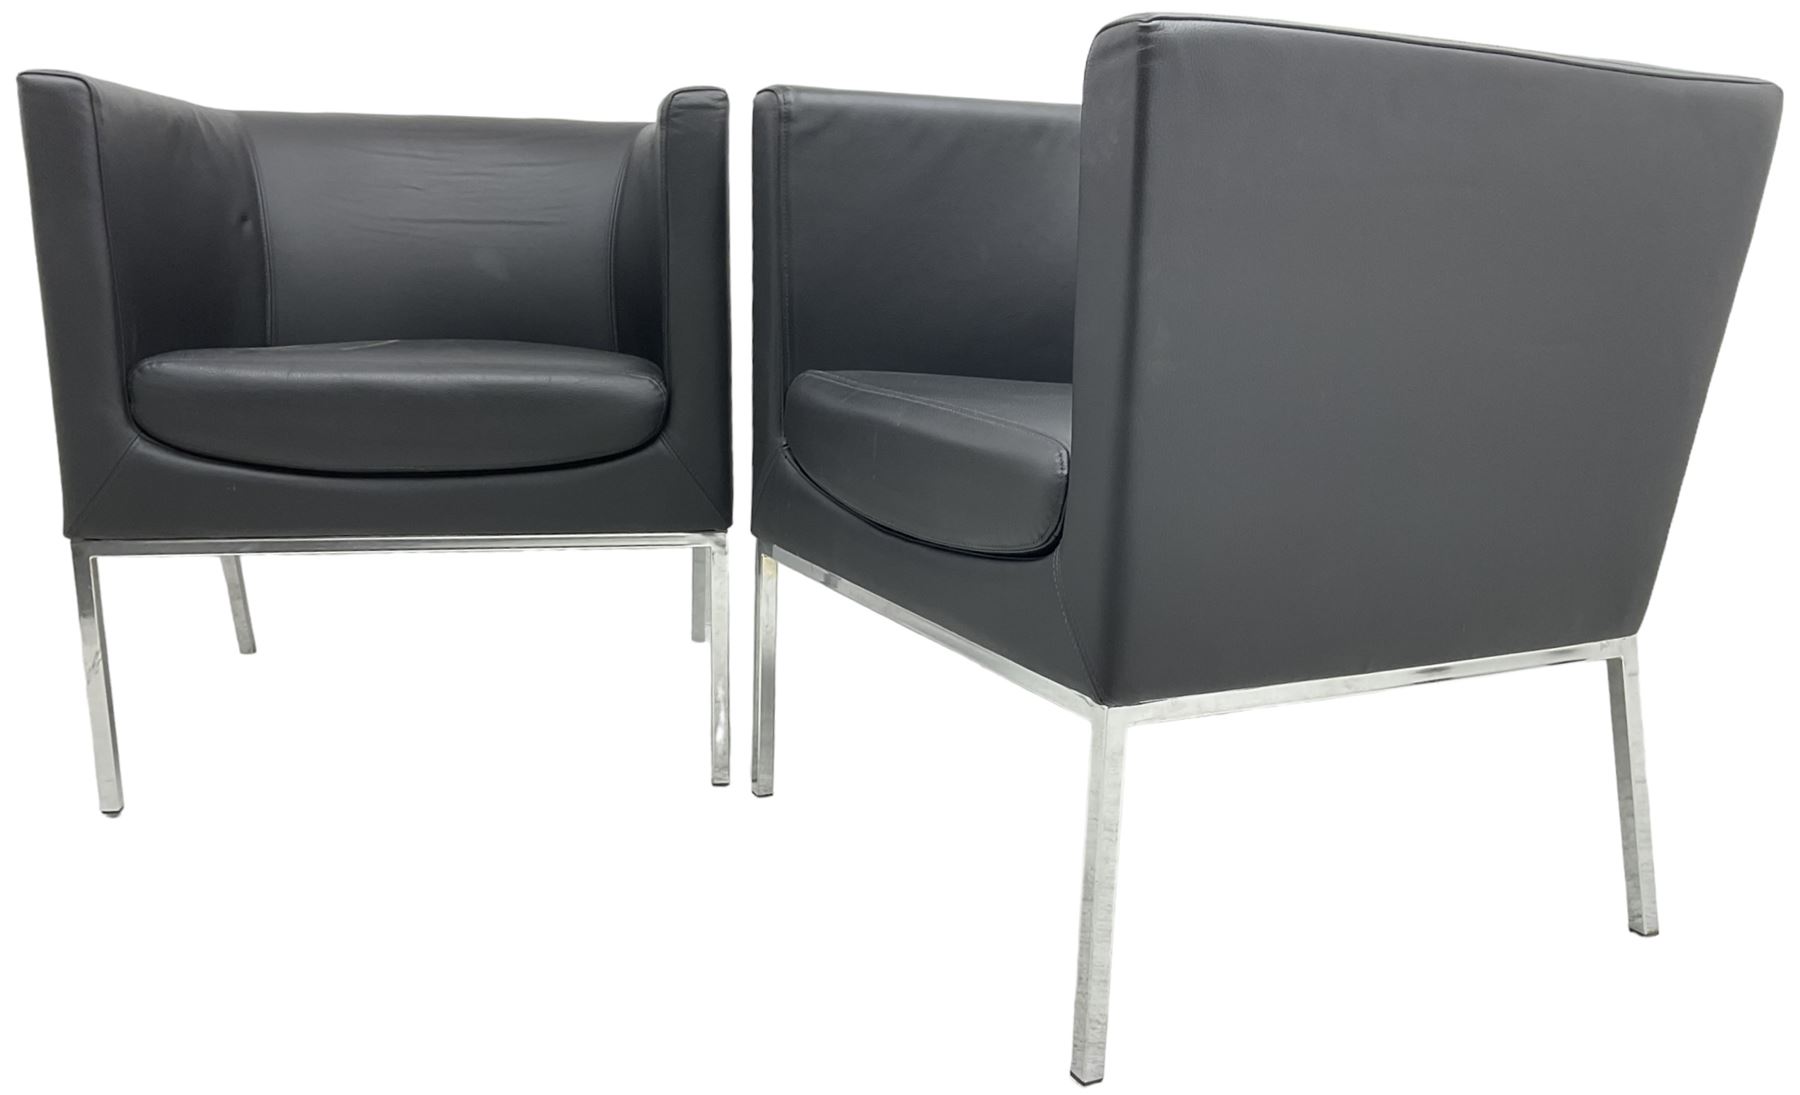 Orangebox - pair of contemporary 'Drift' tub armchairs - Image 2 of 7